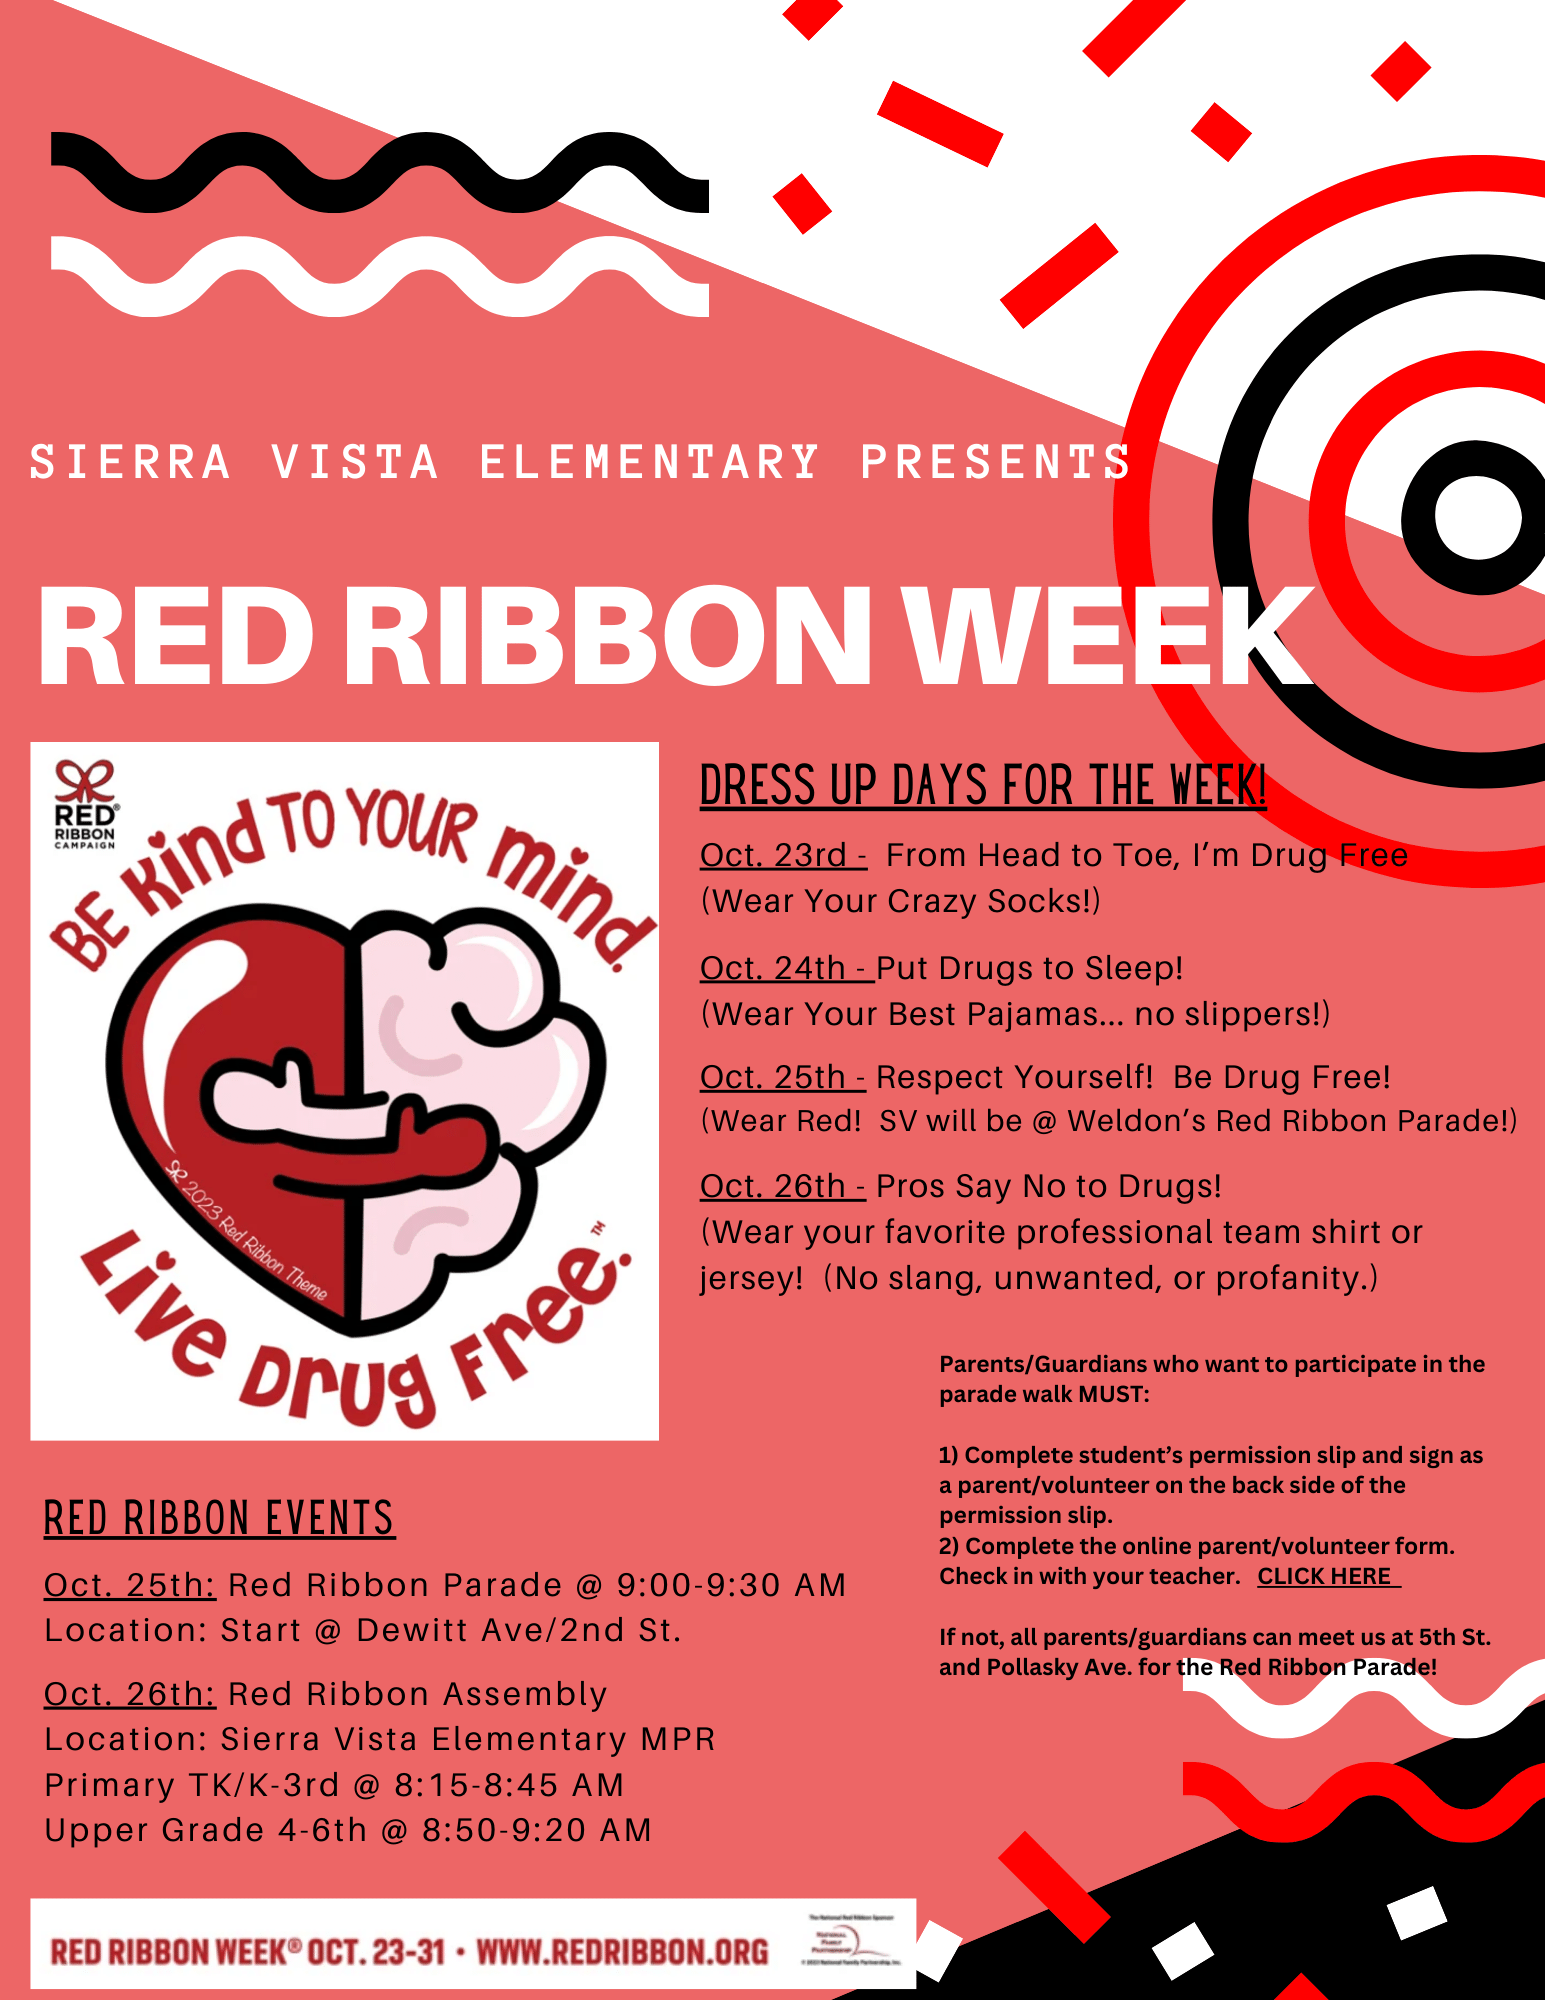 Red Ribbon Week: Oct 25th-29th